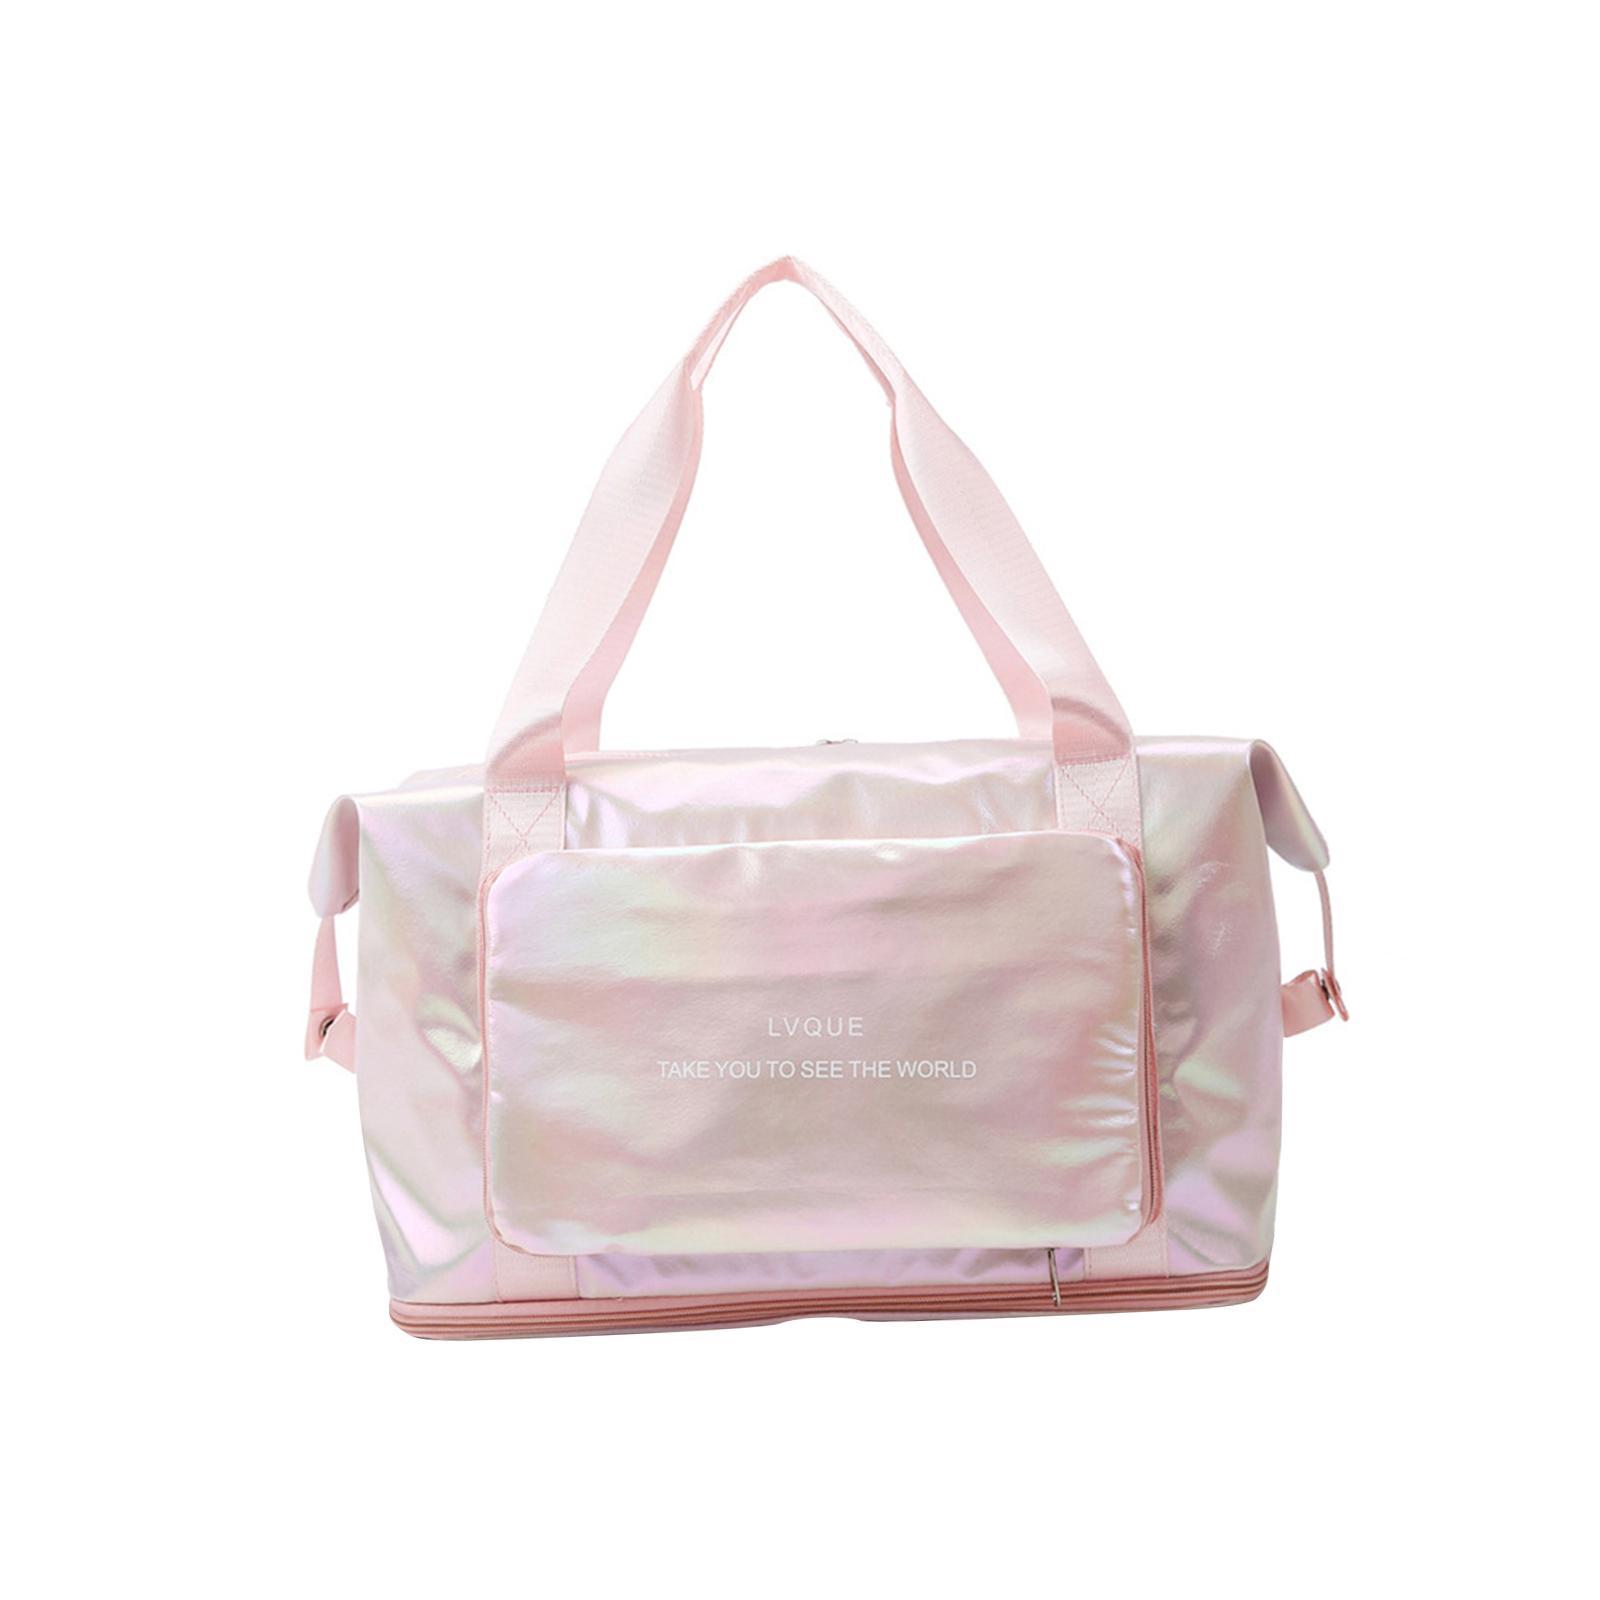 Travel Duffle Bag Sports Gym Bag Weekender Bag Luggage Portable Waterproof Multipurpose Expandable Overnight Bag Handbag for Camping Fitness